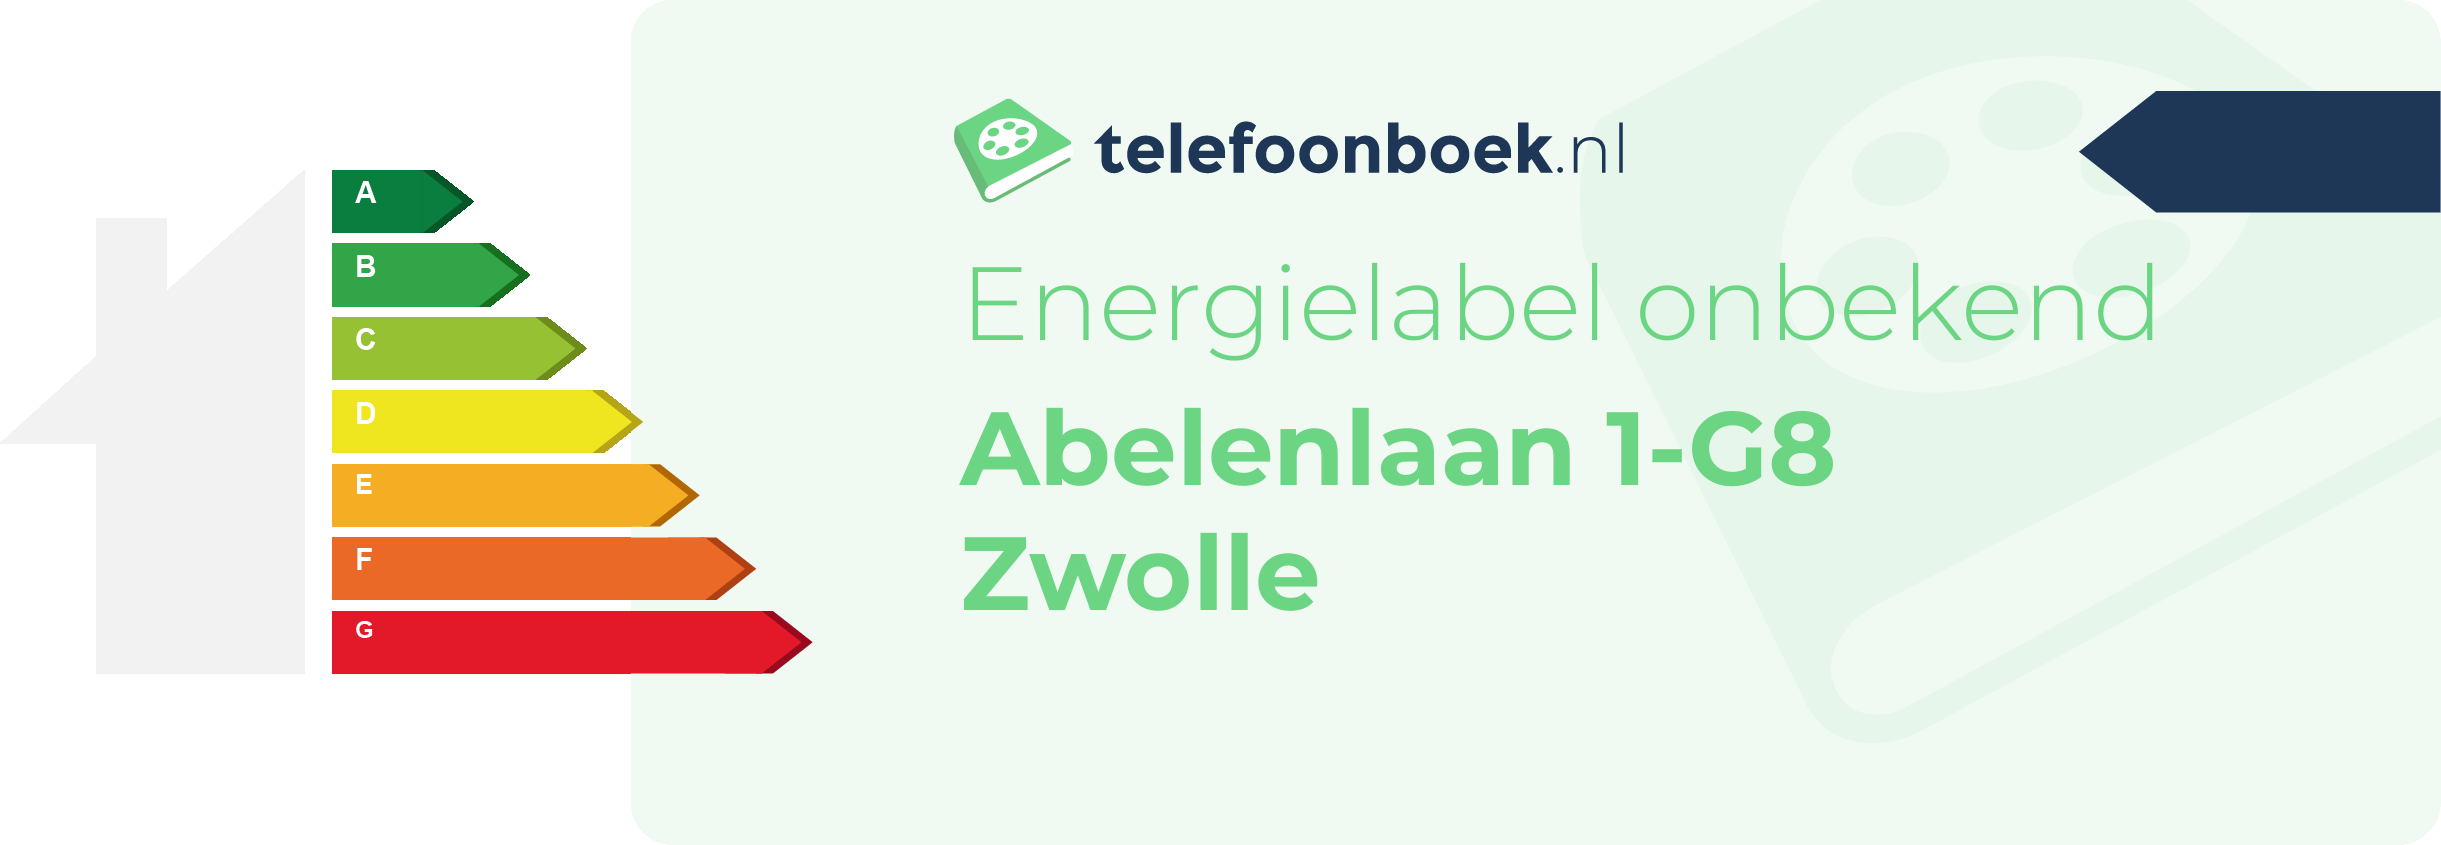 Energielabel Abelenlaan 1-G8 Zwolle